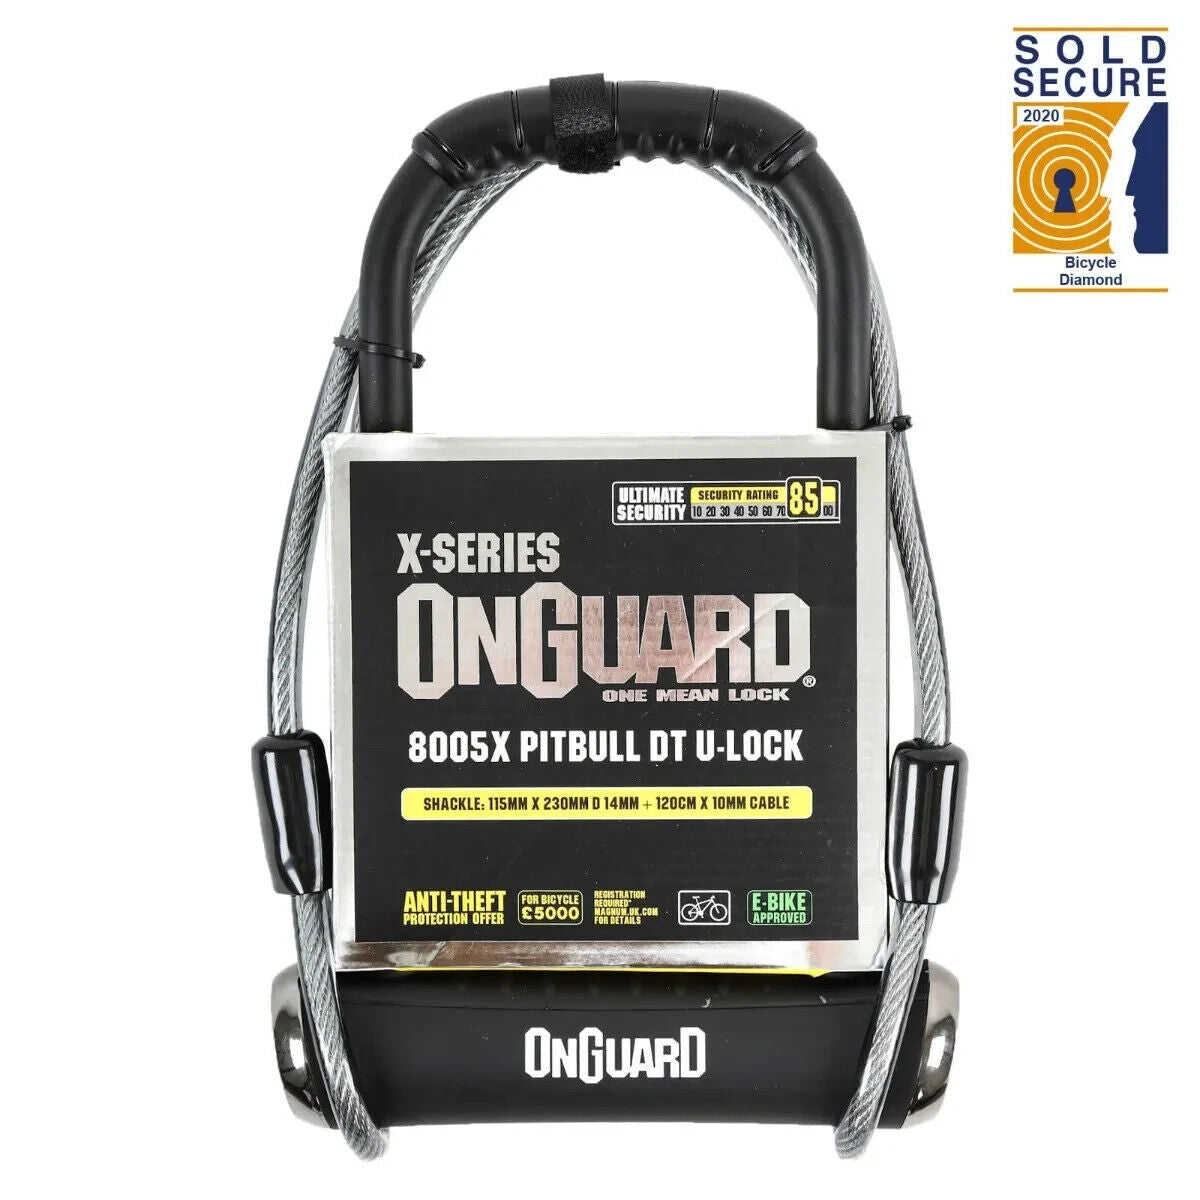 OnGuard Pitbull DT 8005 Large U-Lock - Sold Secure Diamond - Sportandleisure.com